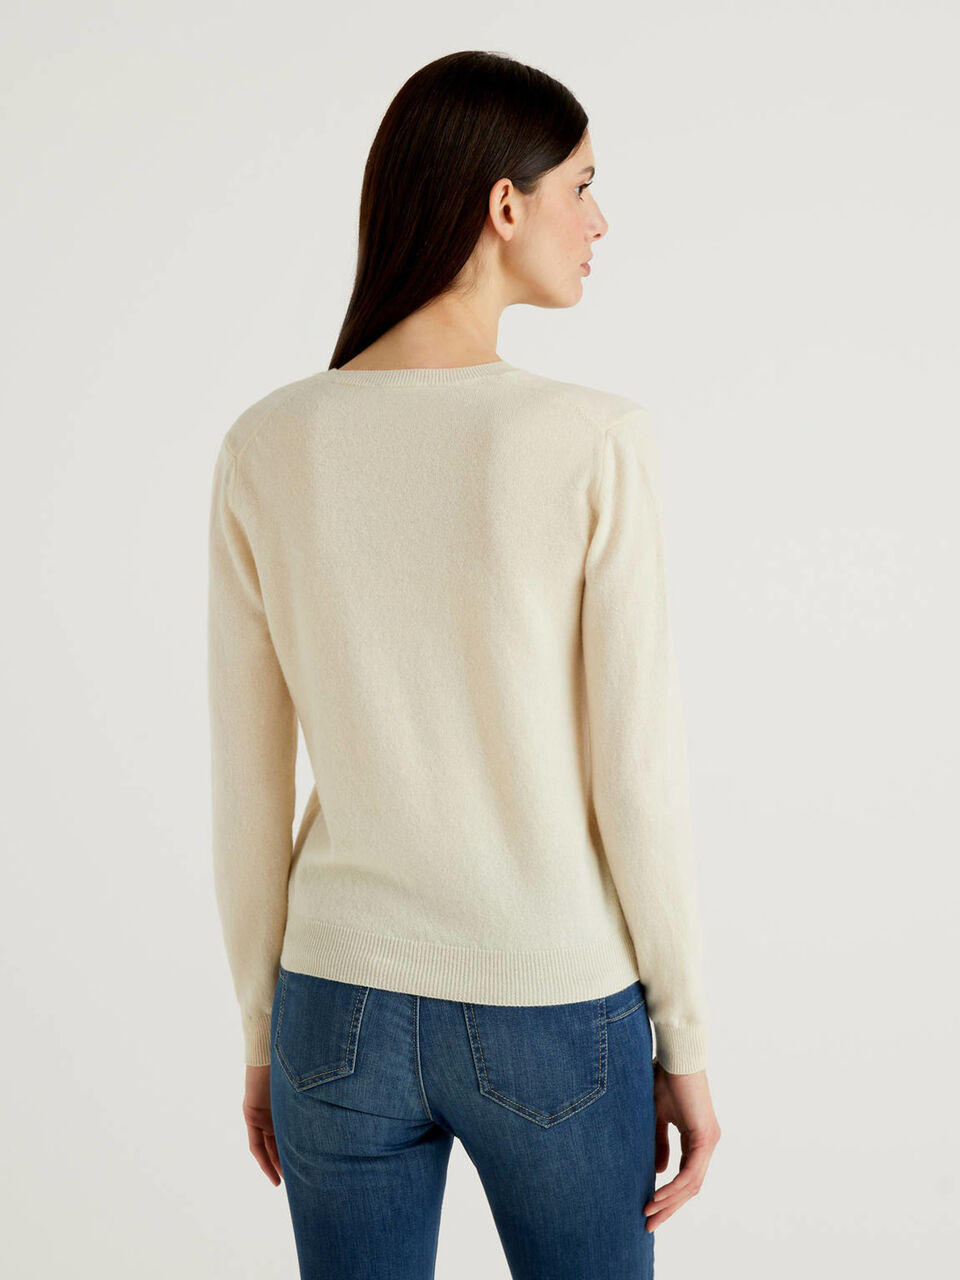 Cream V-neck sweater in pure virgin wool